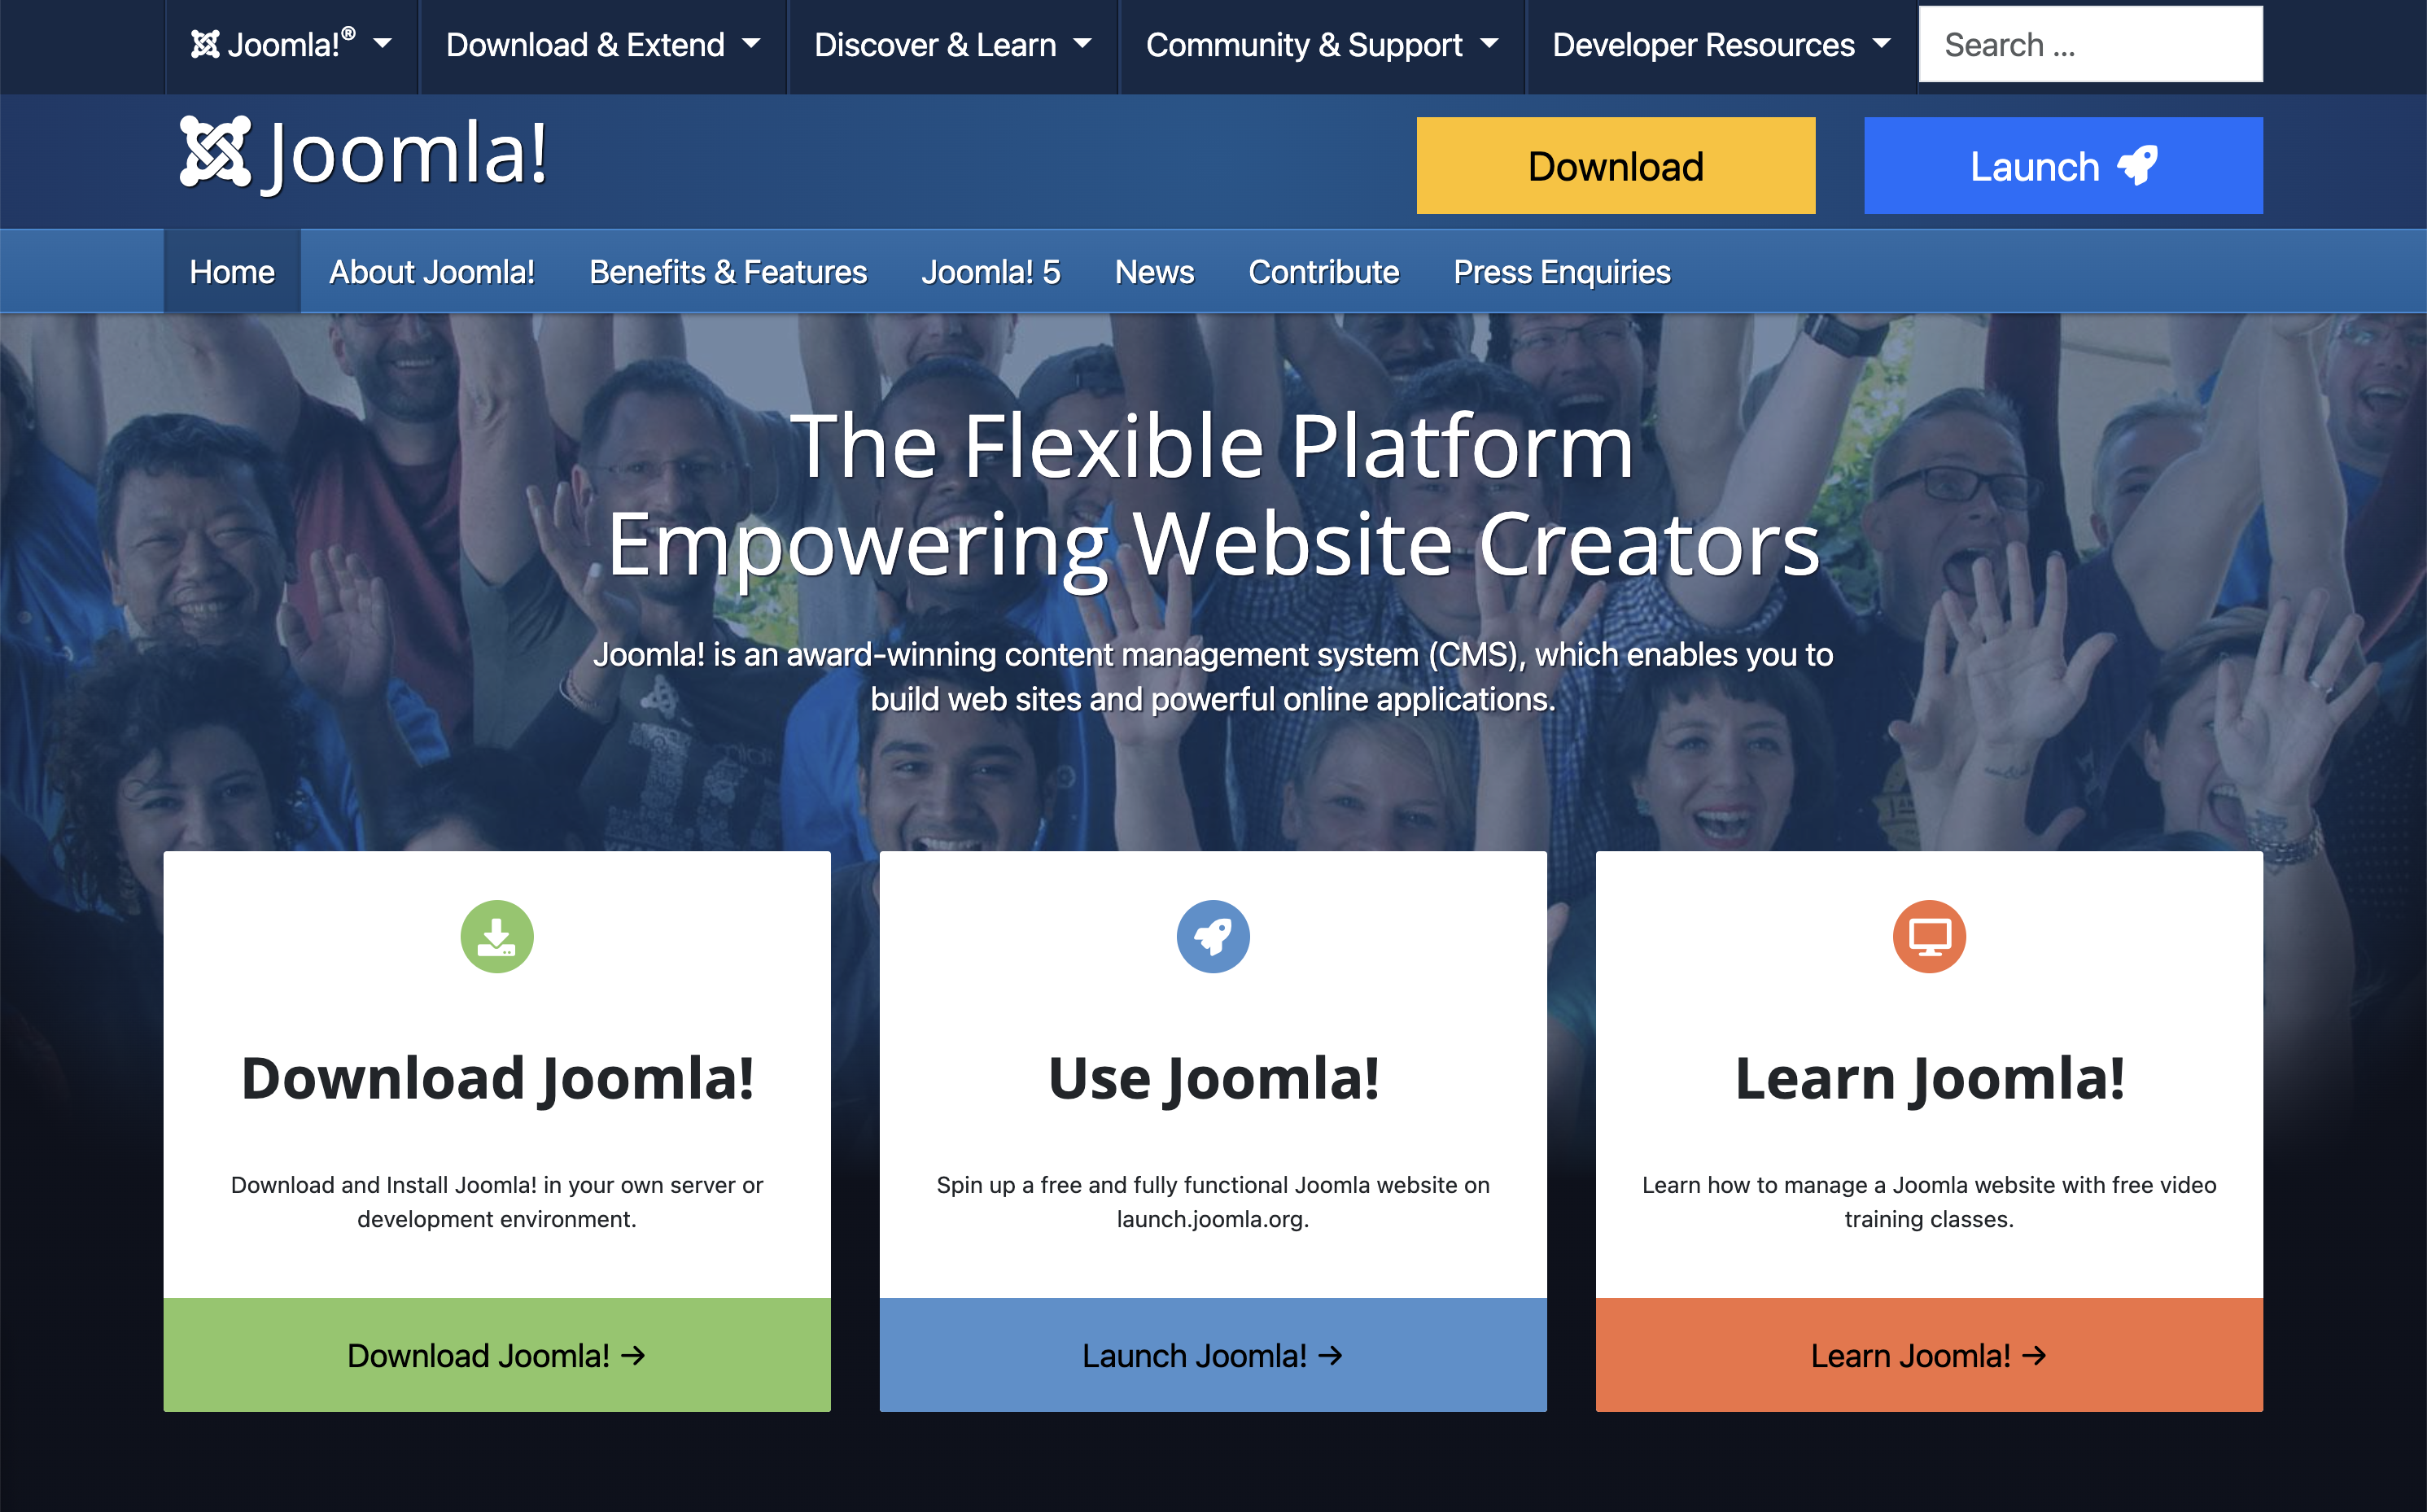 joomla homepage 657 - 25 WordPress Alternatives Best For SEO